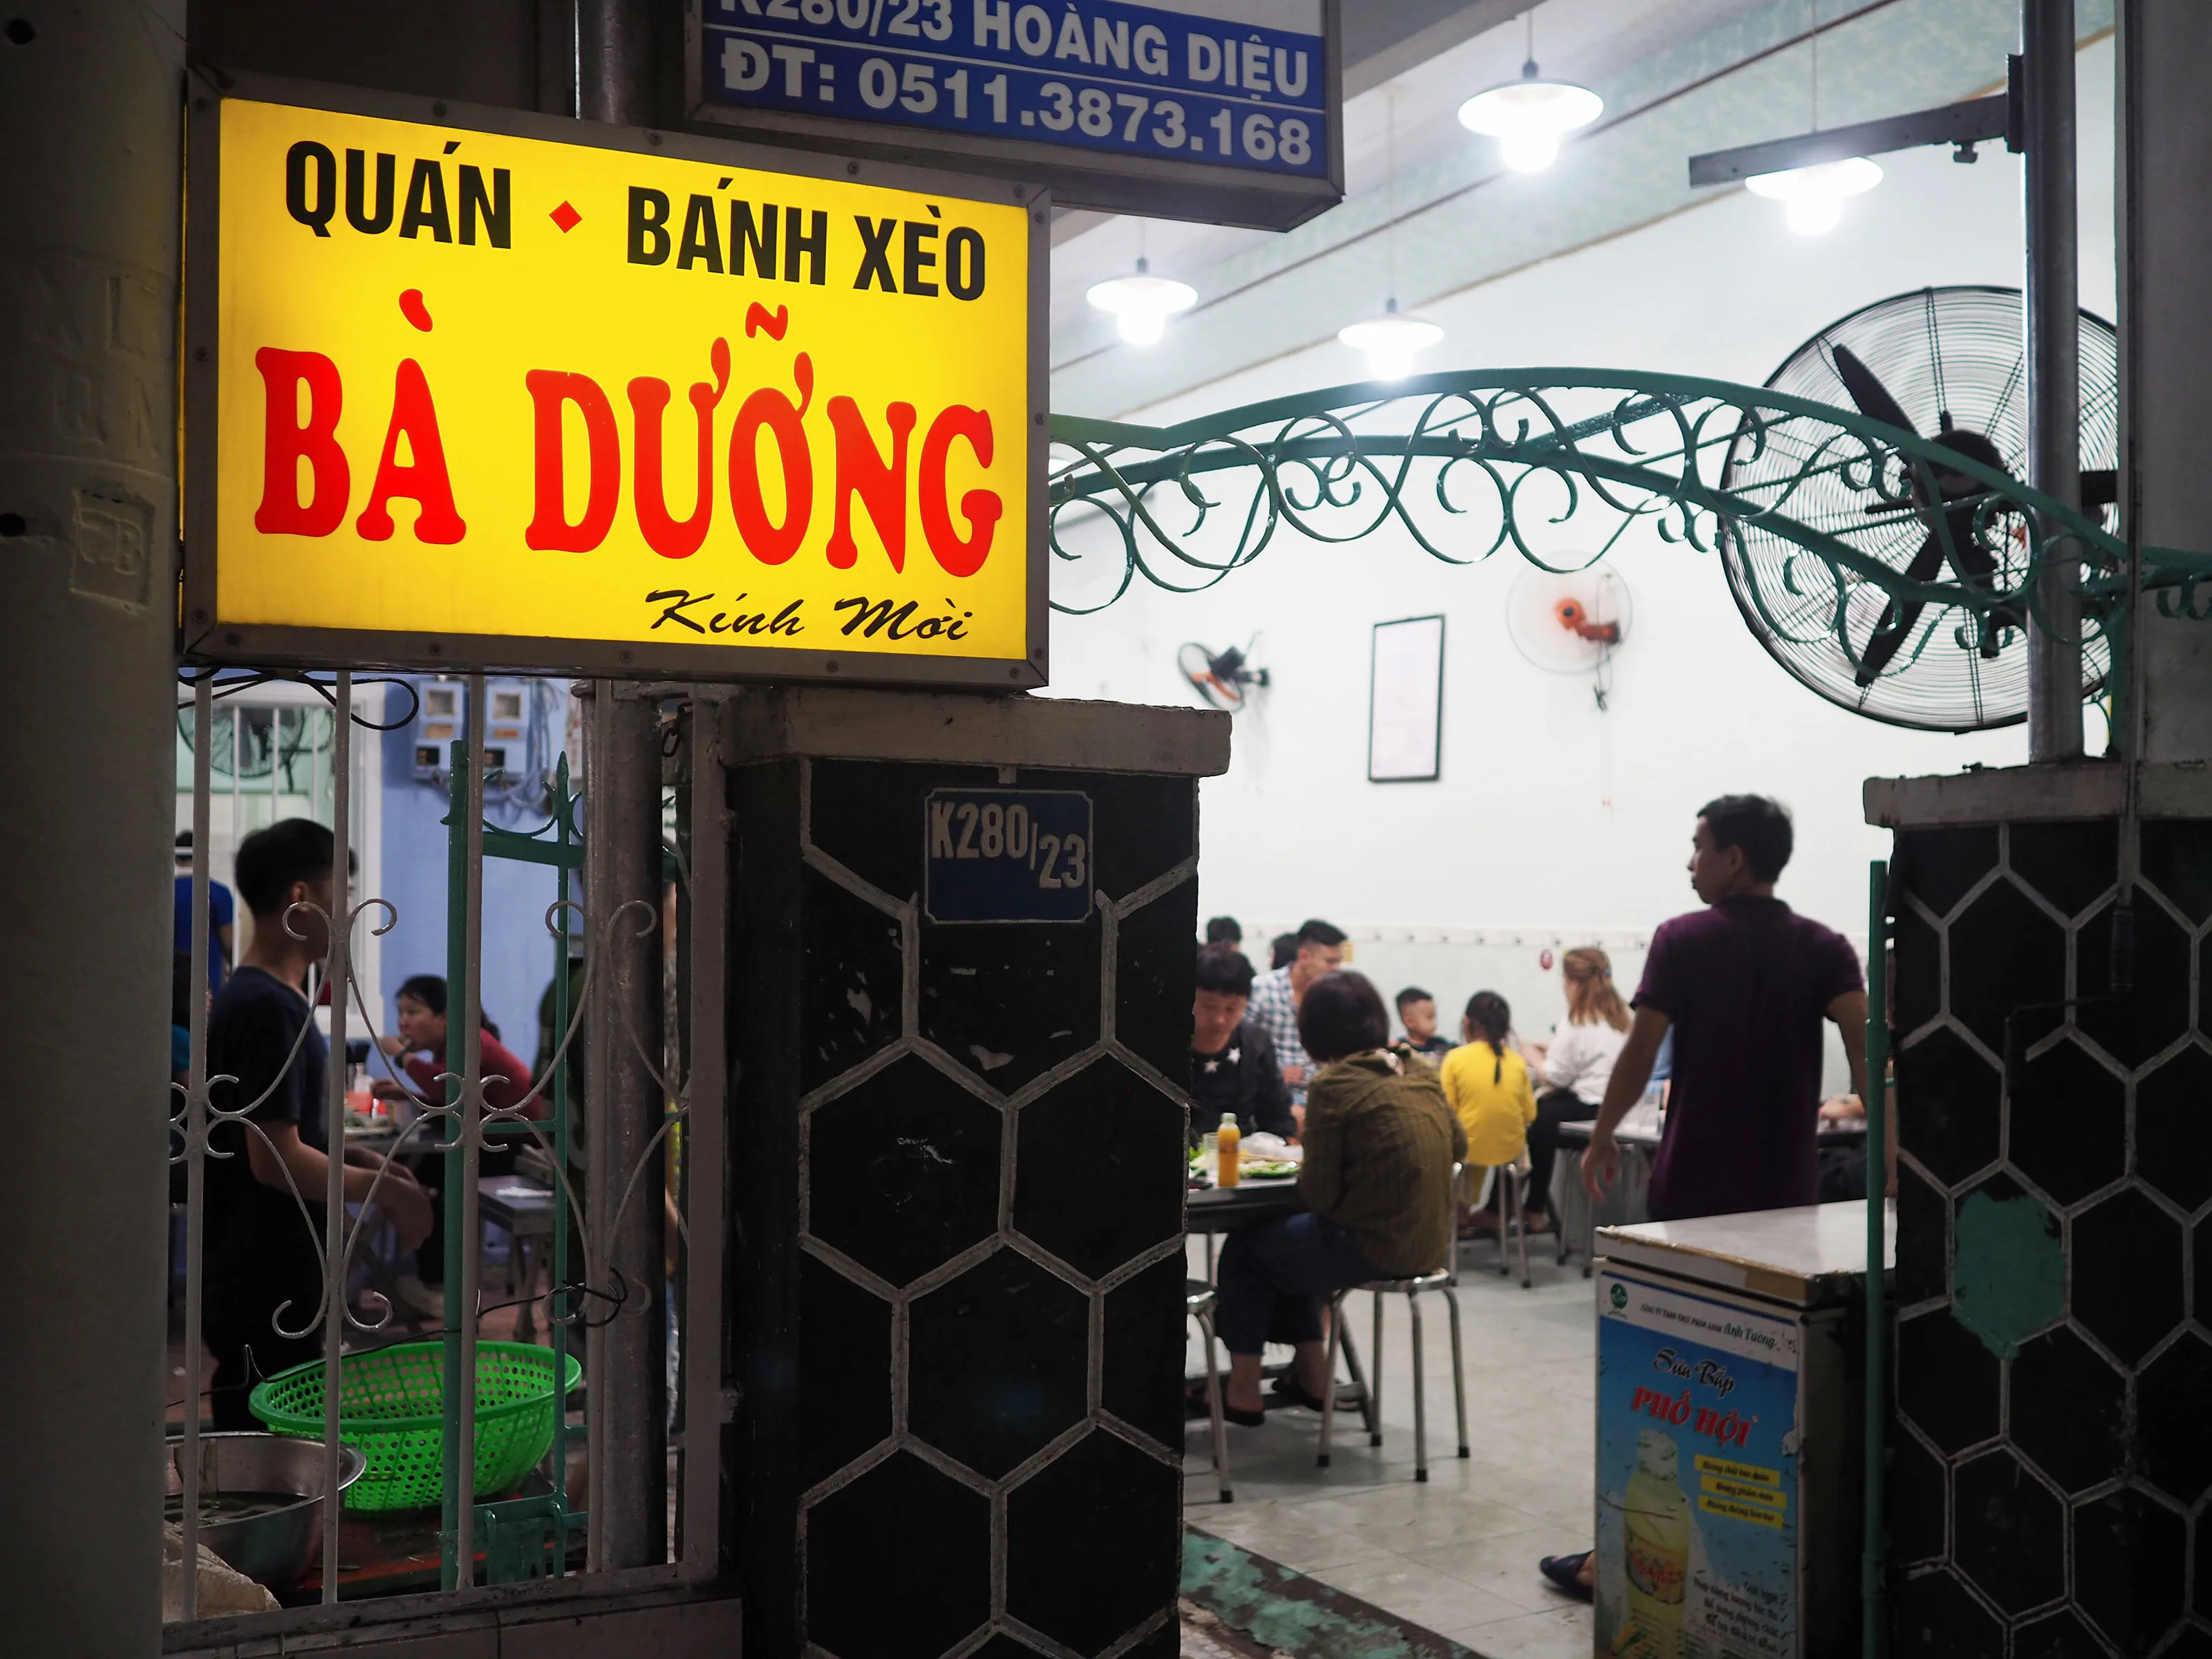 Ba Duong is a popular spot to eat Banh Xeo, crispy rice pancakes. 